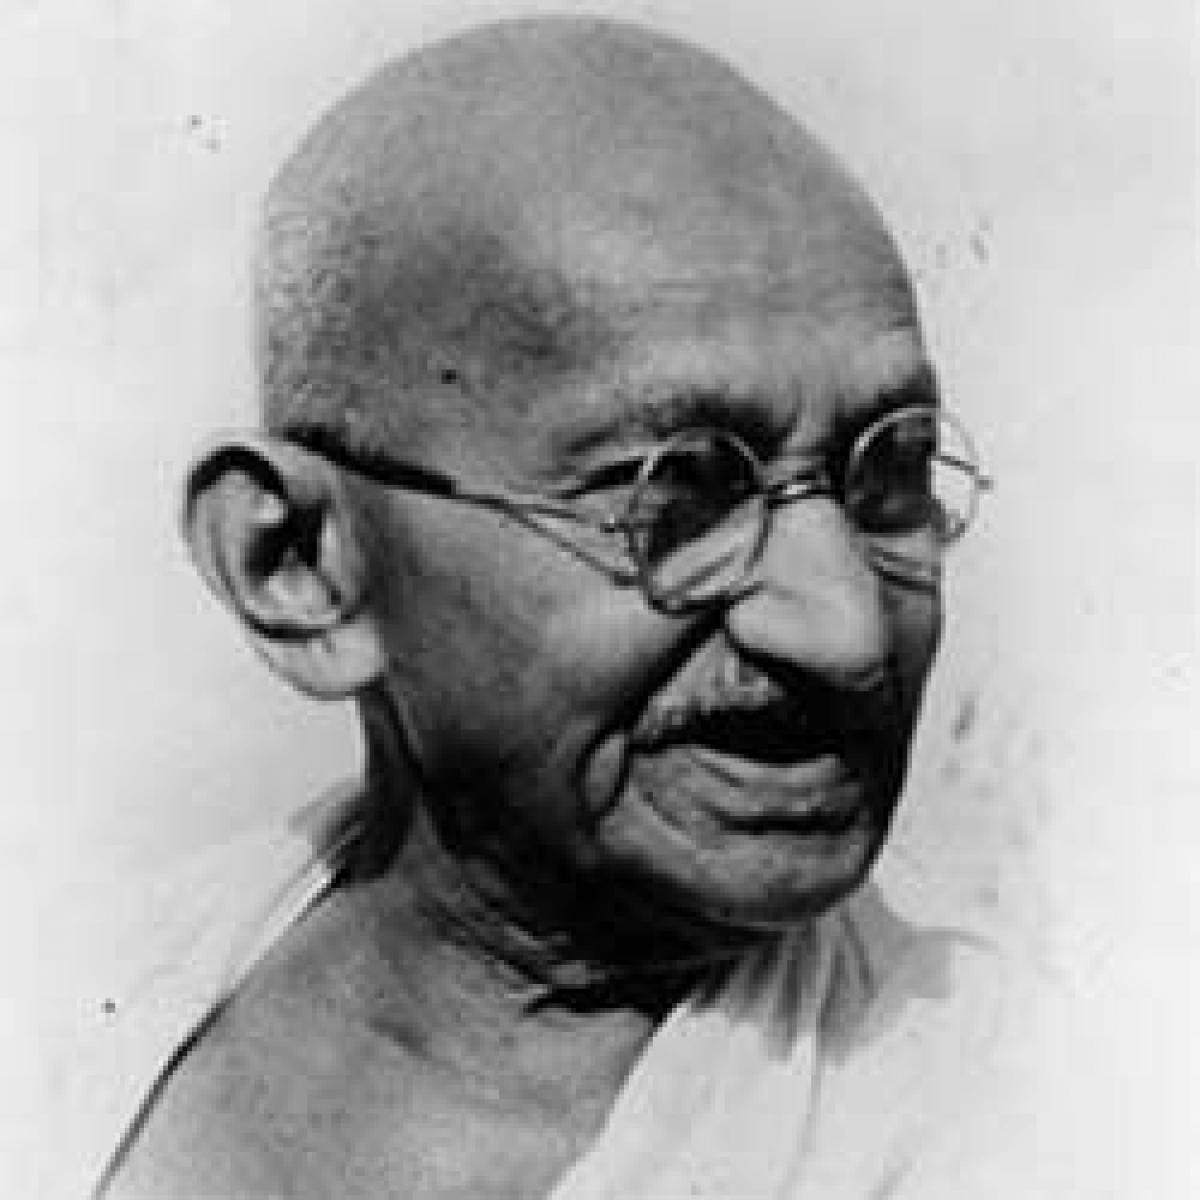 Gandhi peace prize